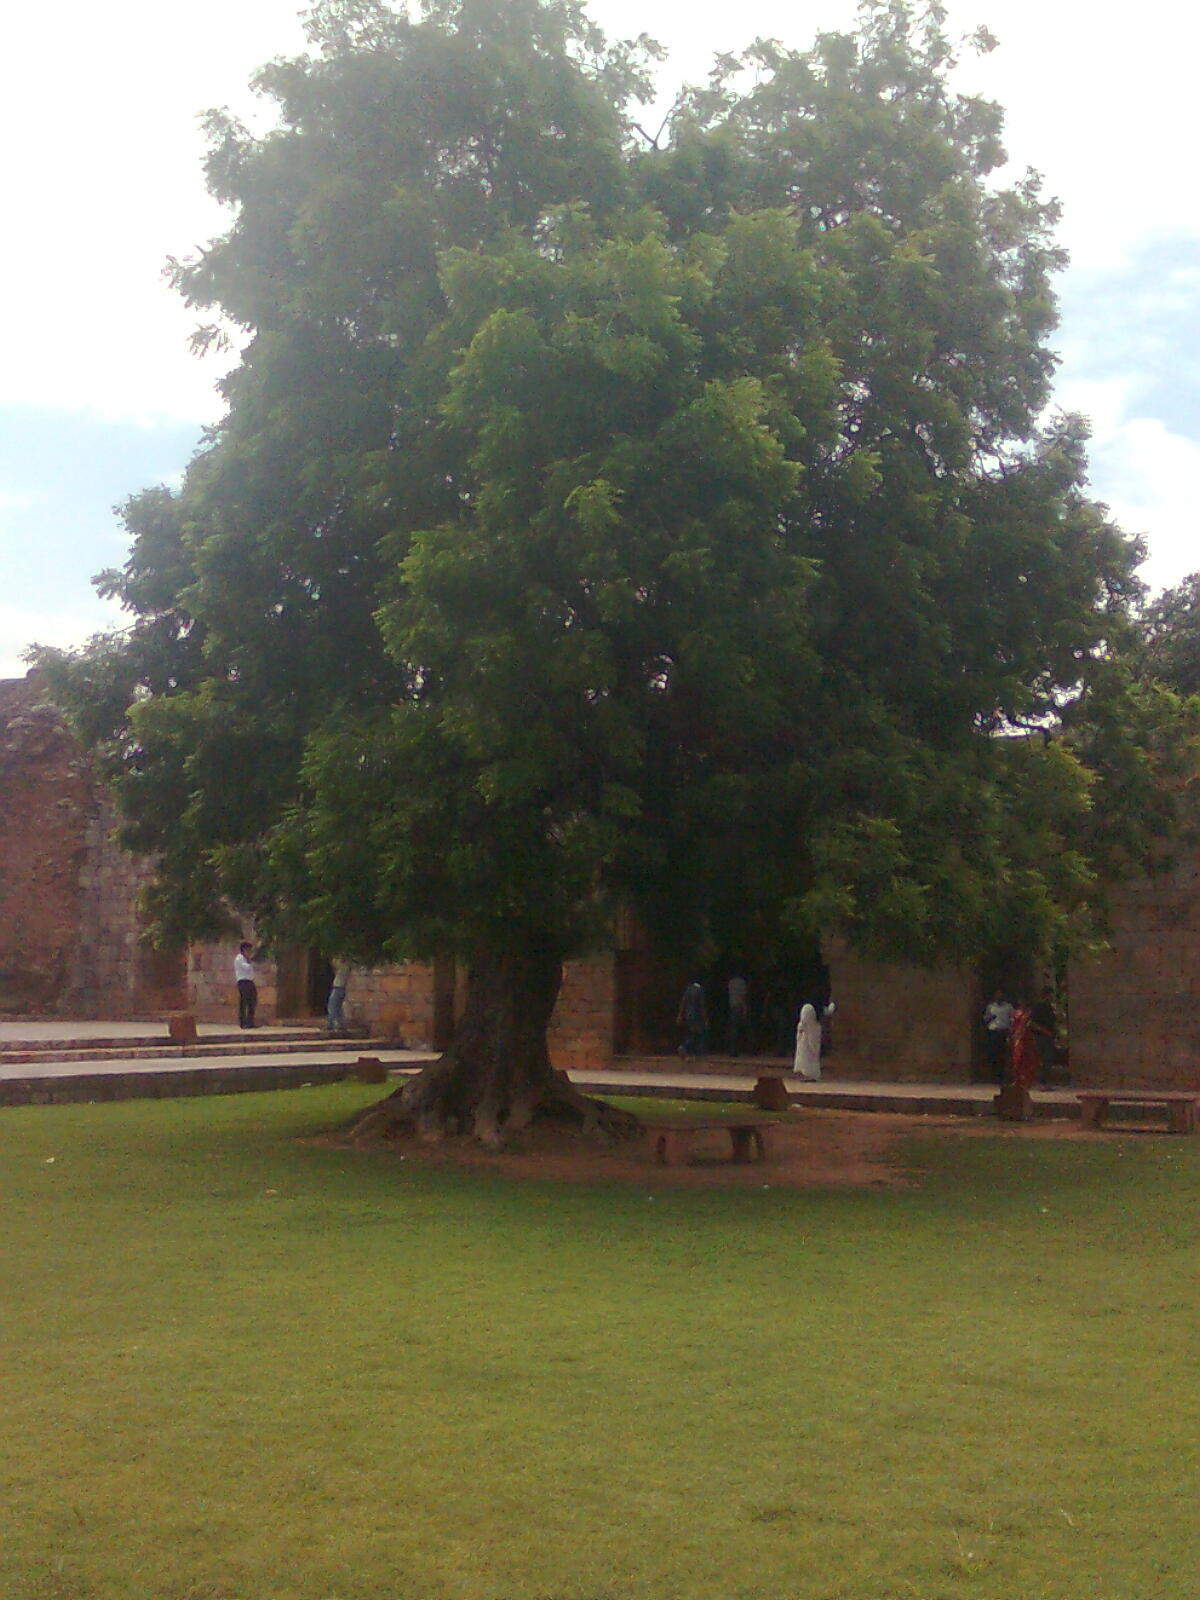 The tree photo